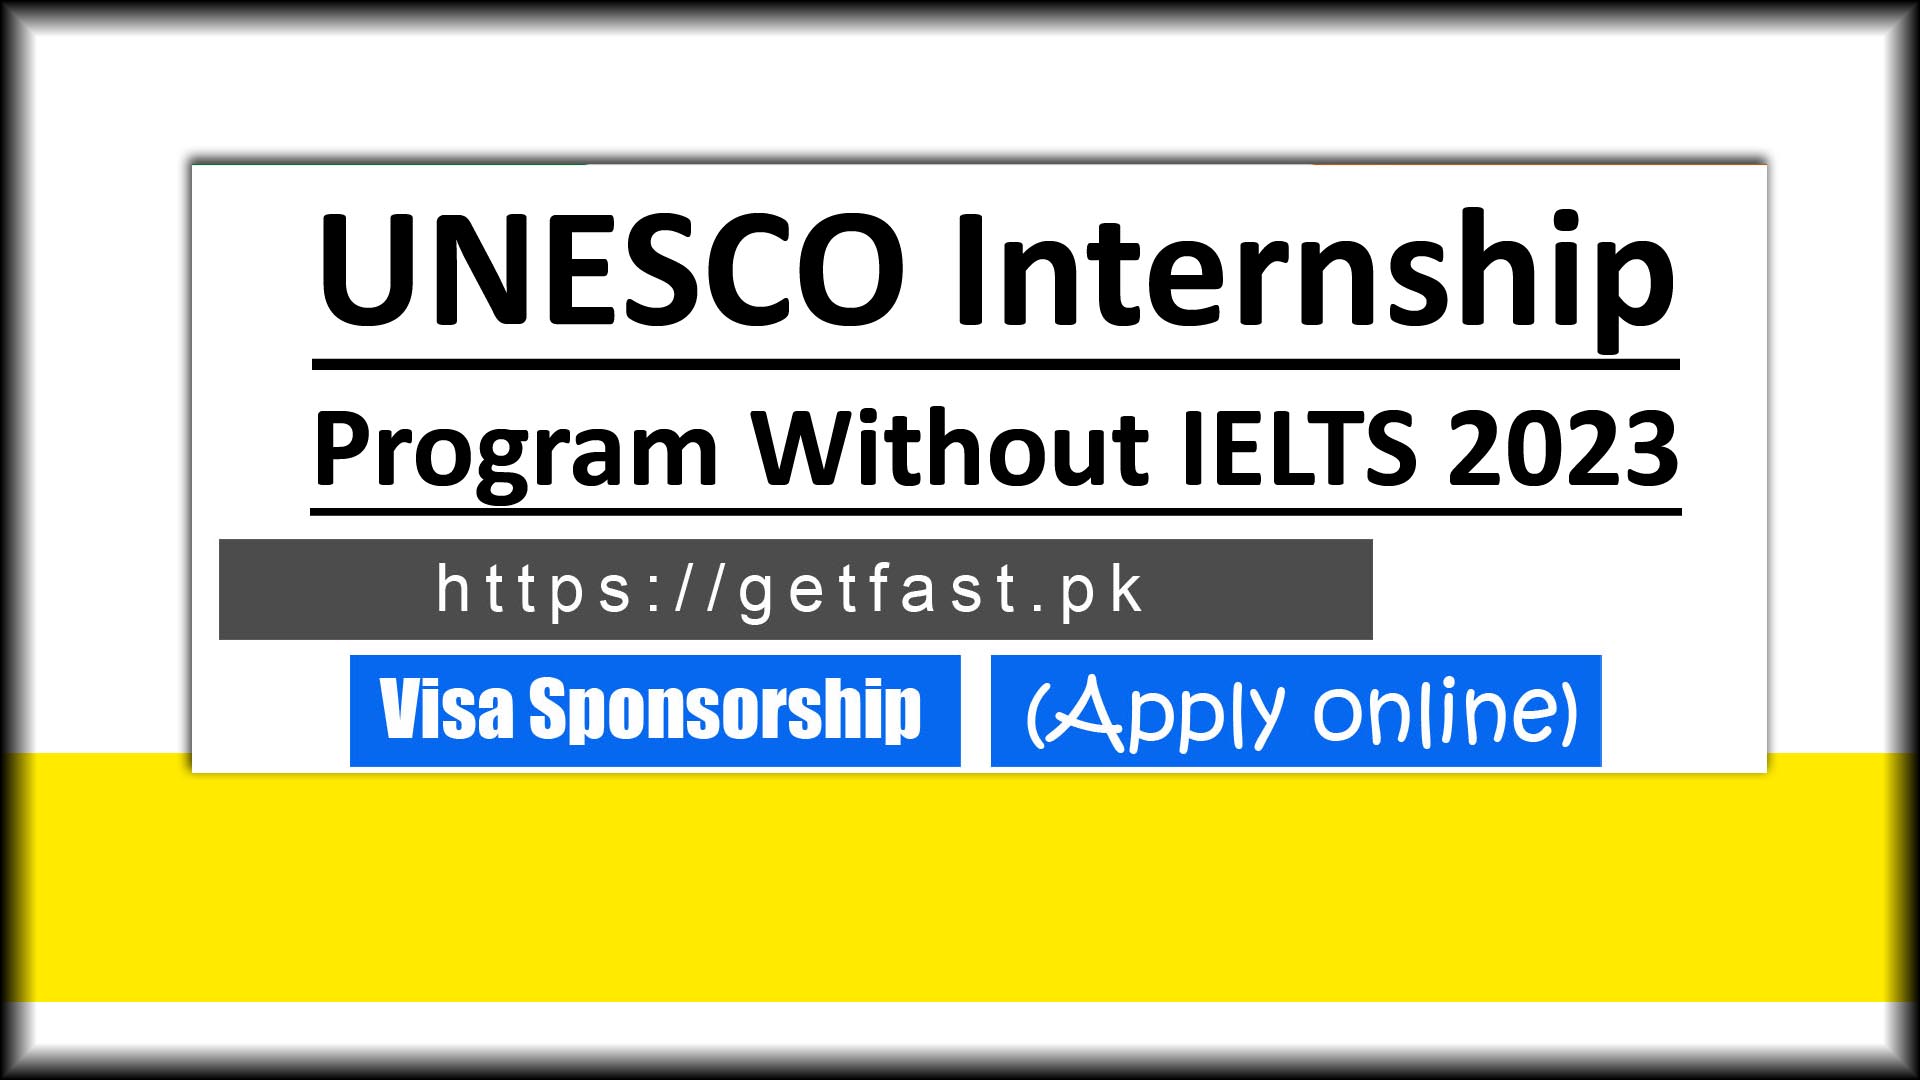 UNESCO Internship Program Without IELTS